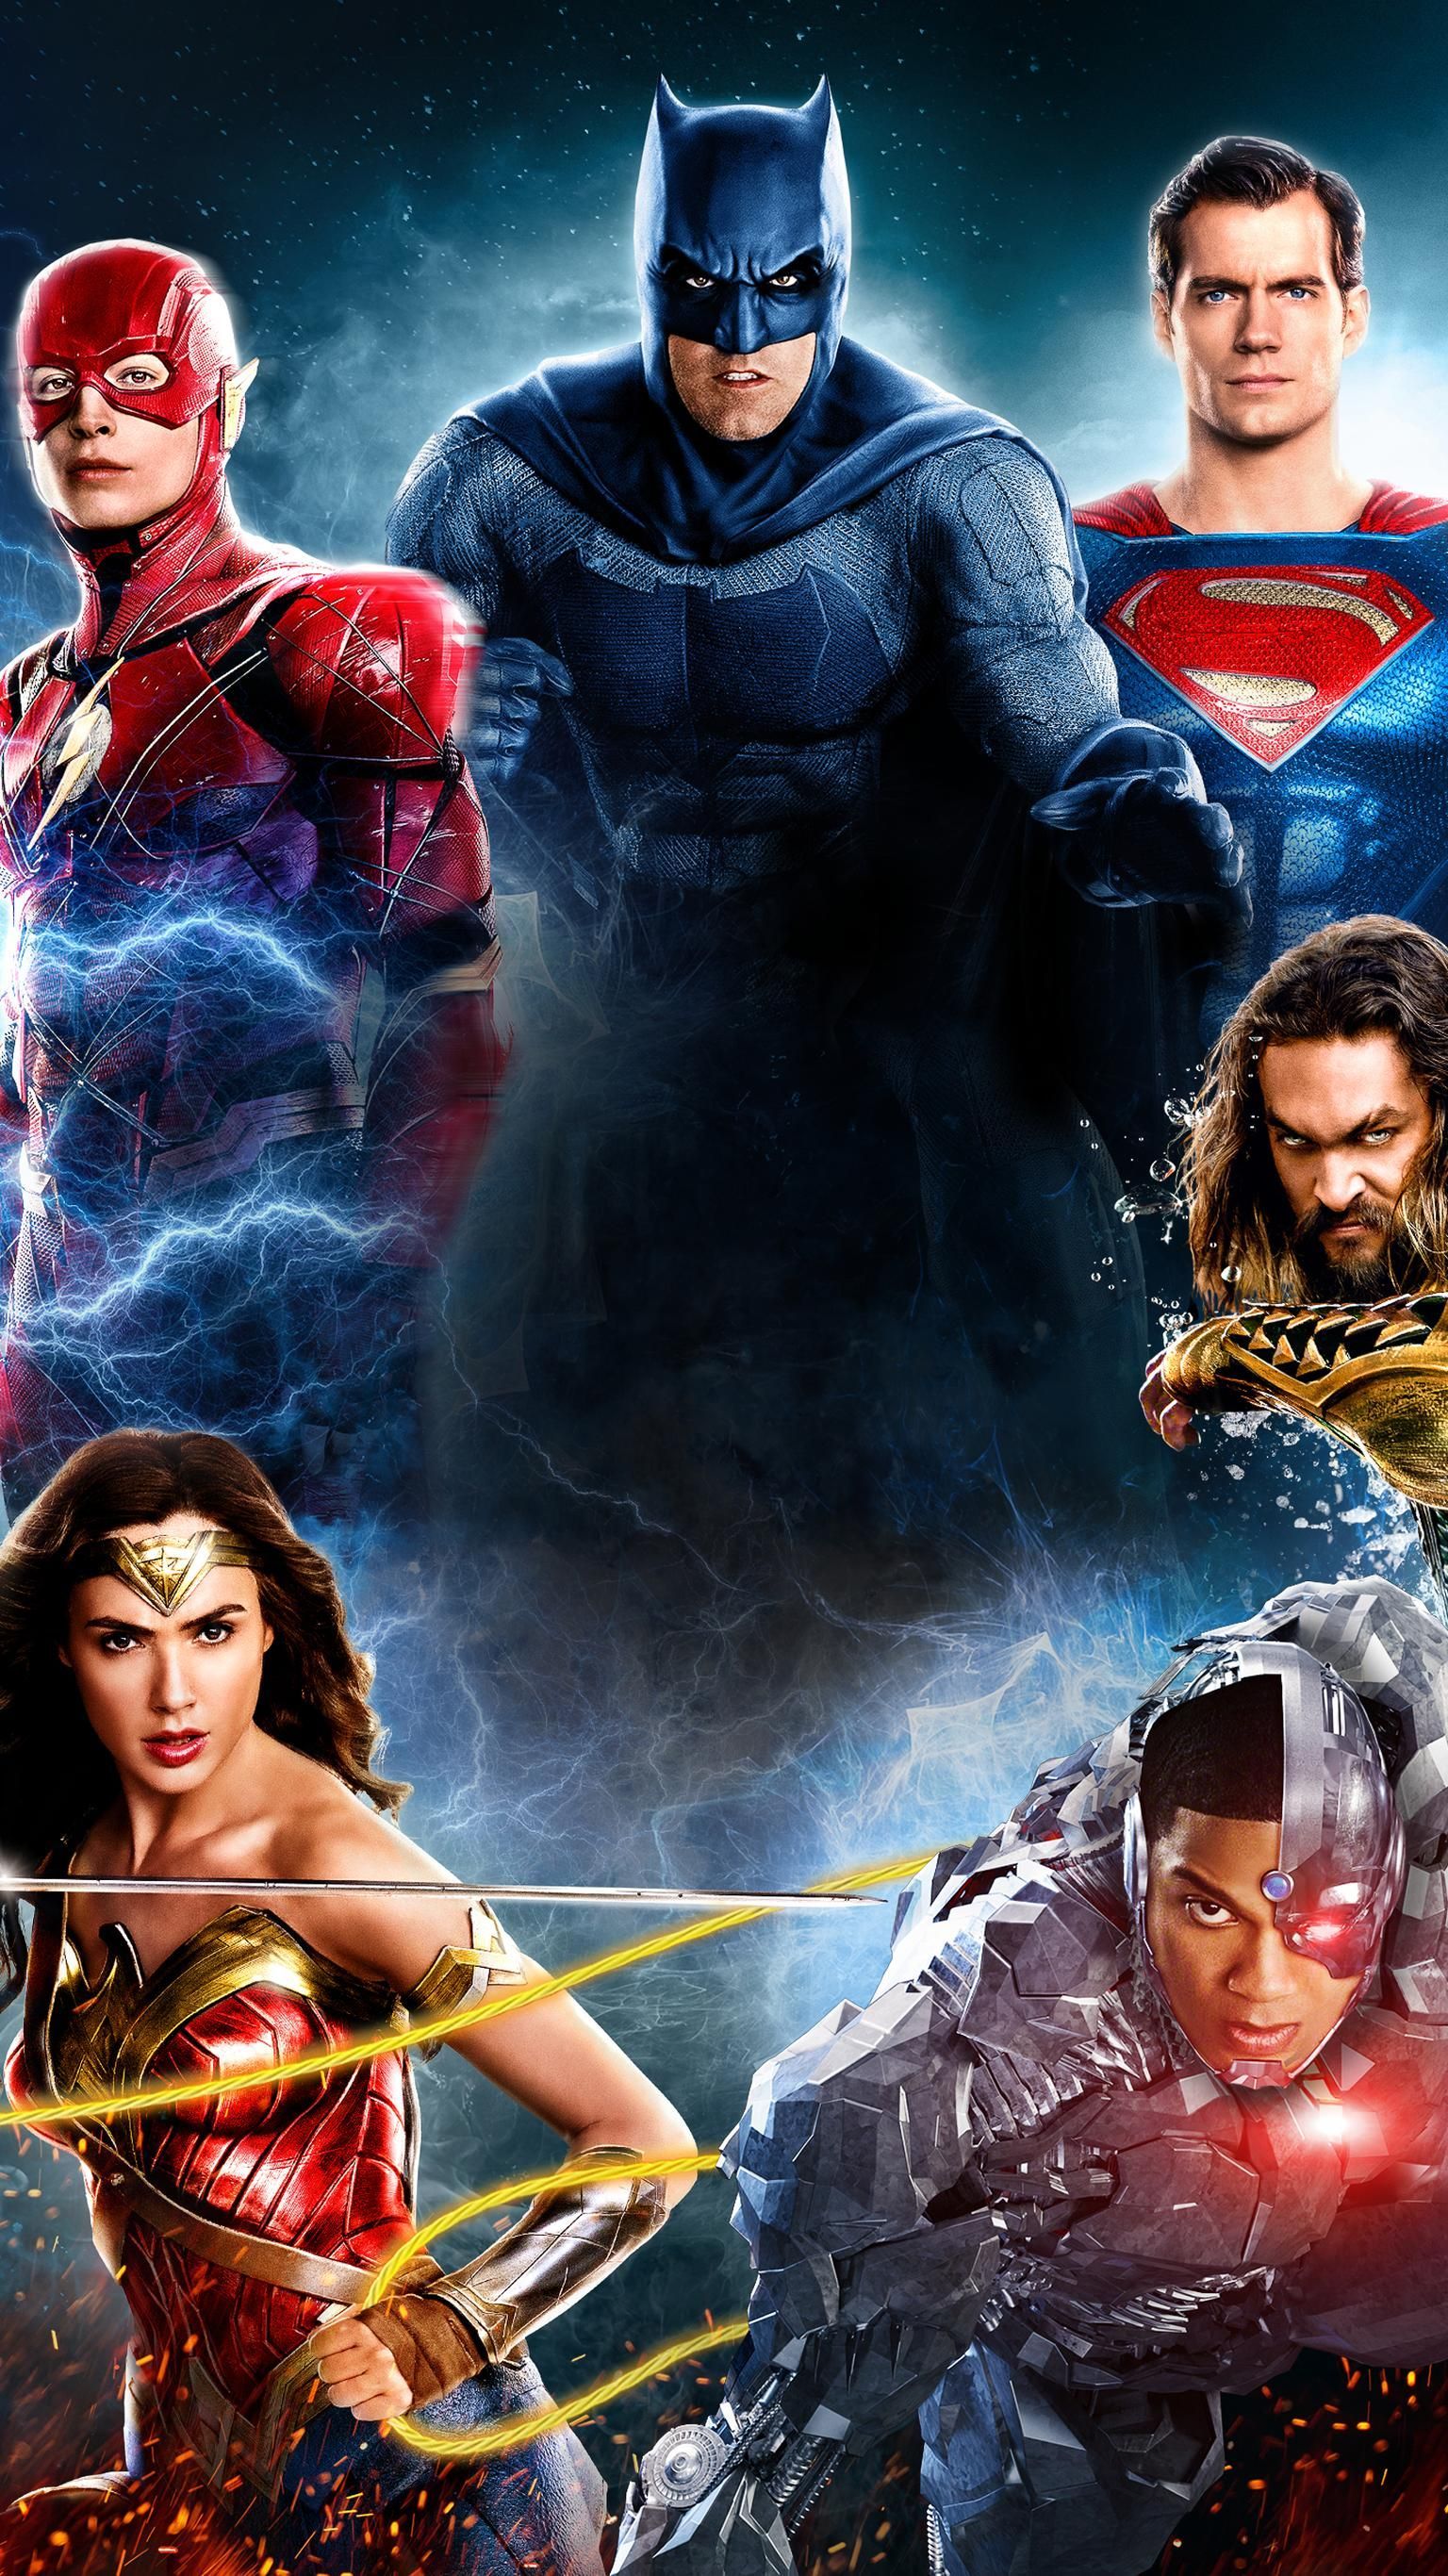 Justice League (2017) Phone Wallpaper. Moviemania. Justice league Justice league comics, Justice league characters